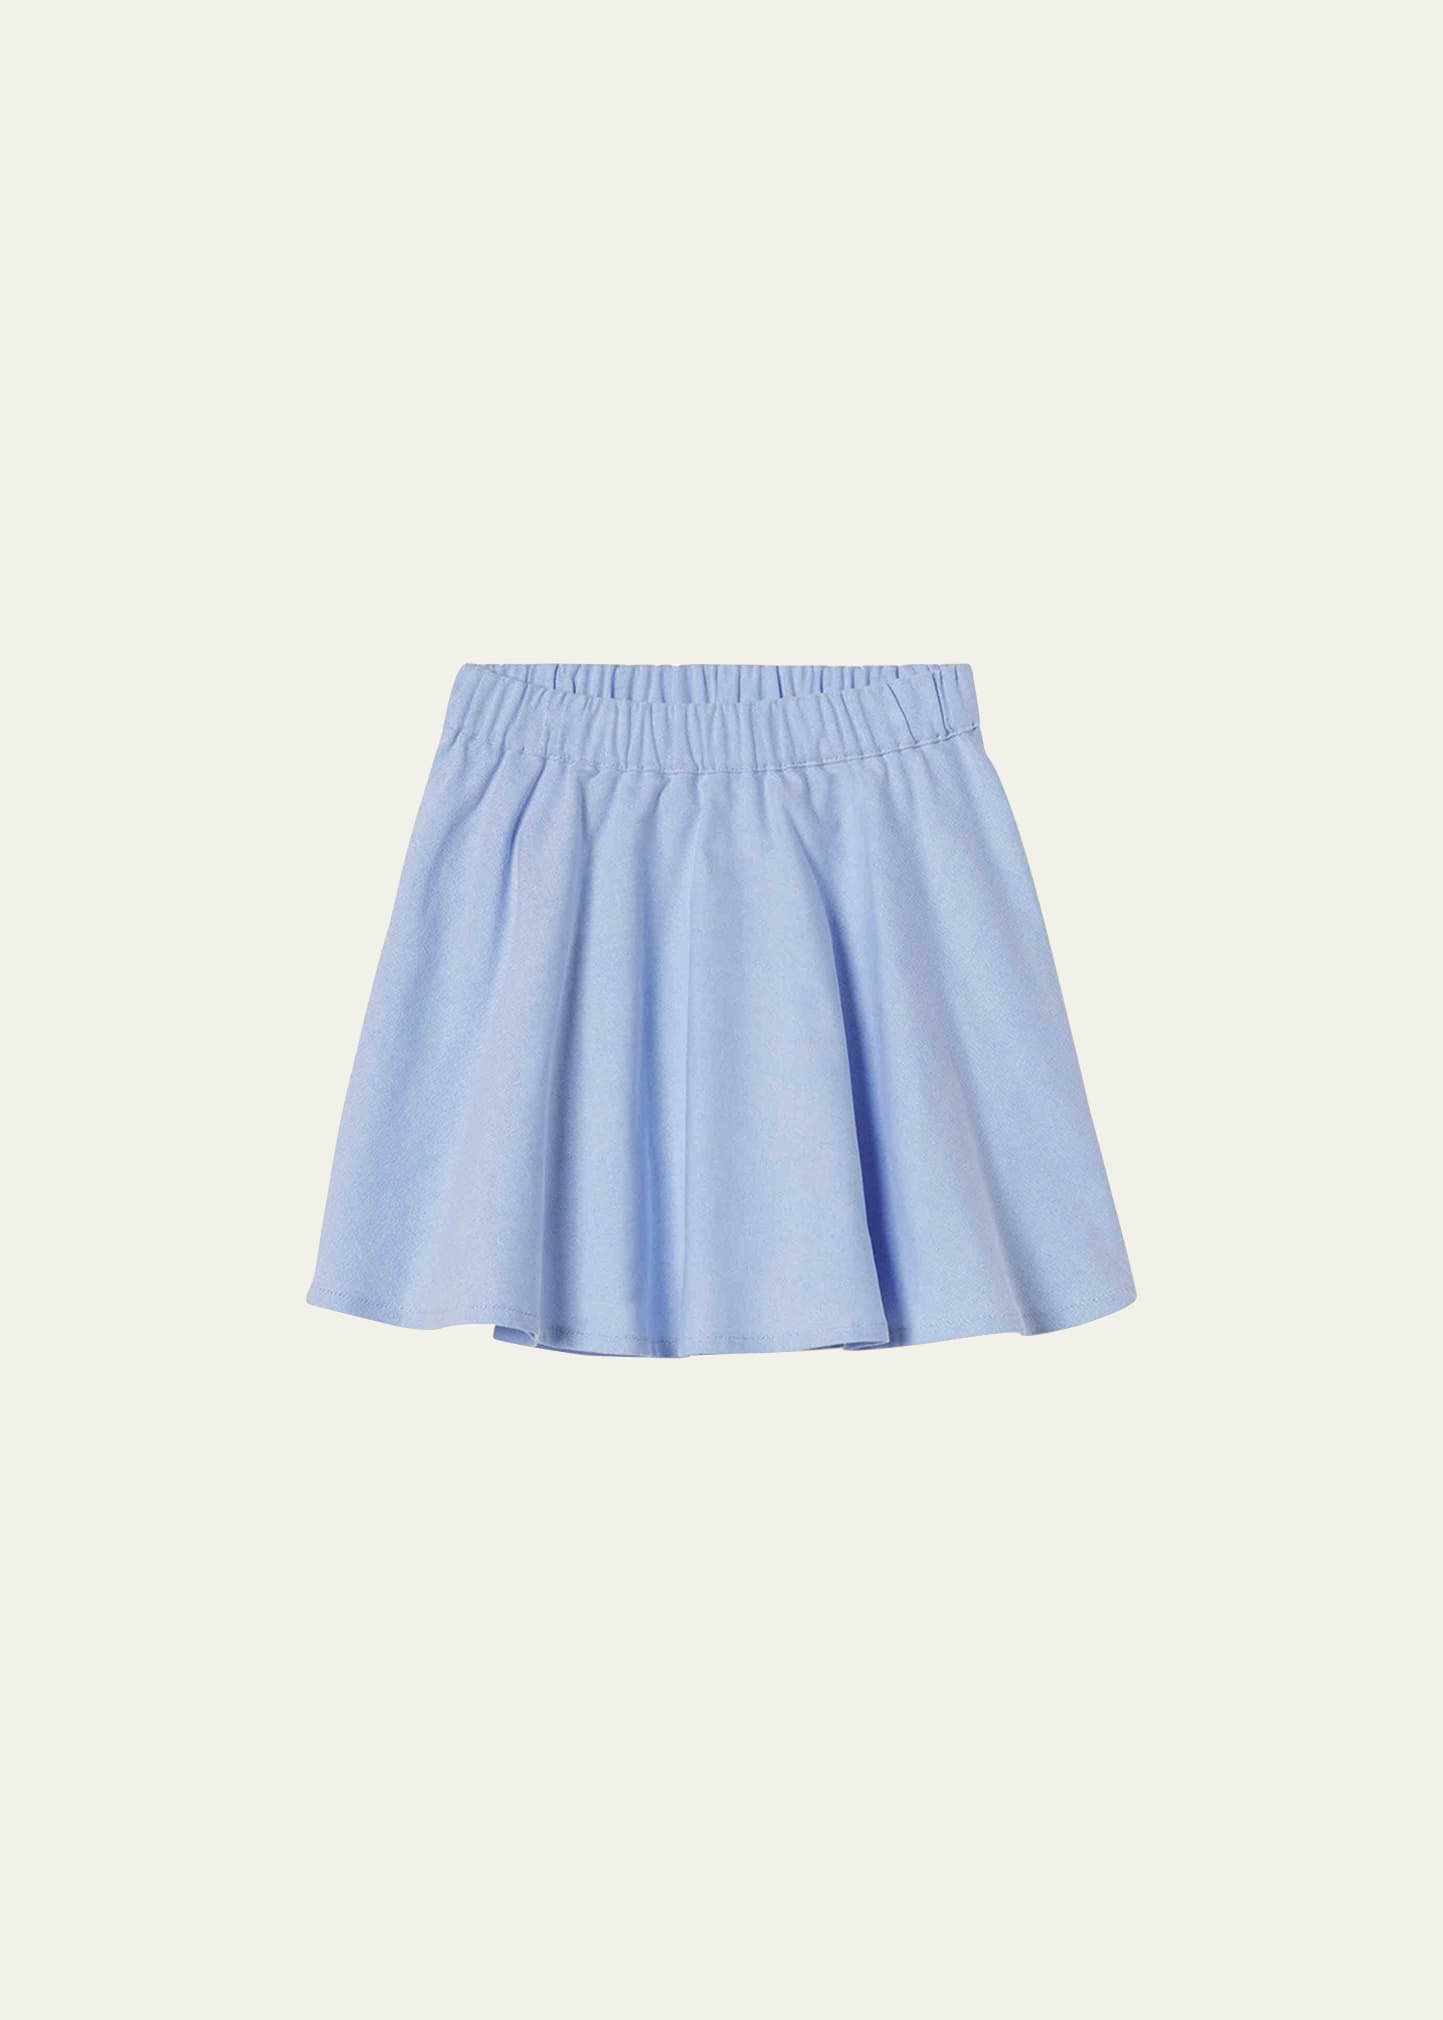 Shop Classic Prep Childrenswear Girl's Sabrina Skirt - Solid Oxford In Nantucket Breeze